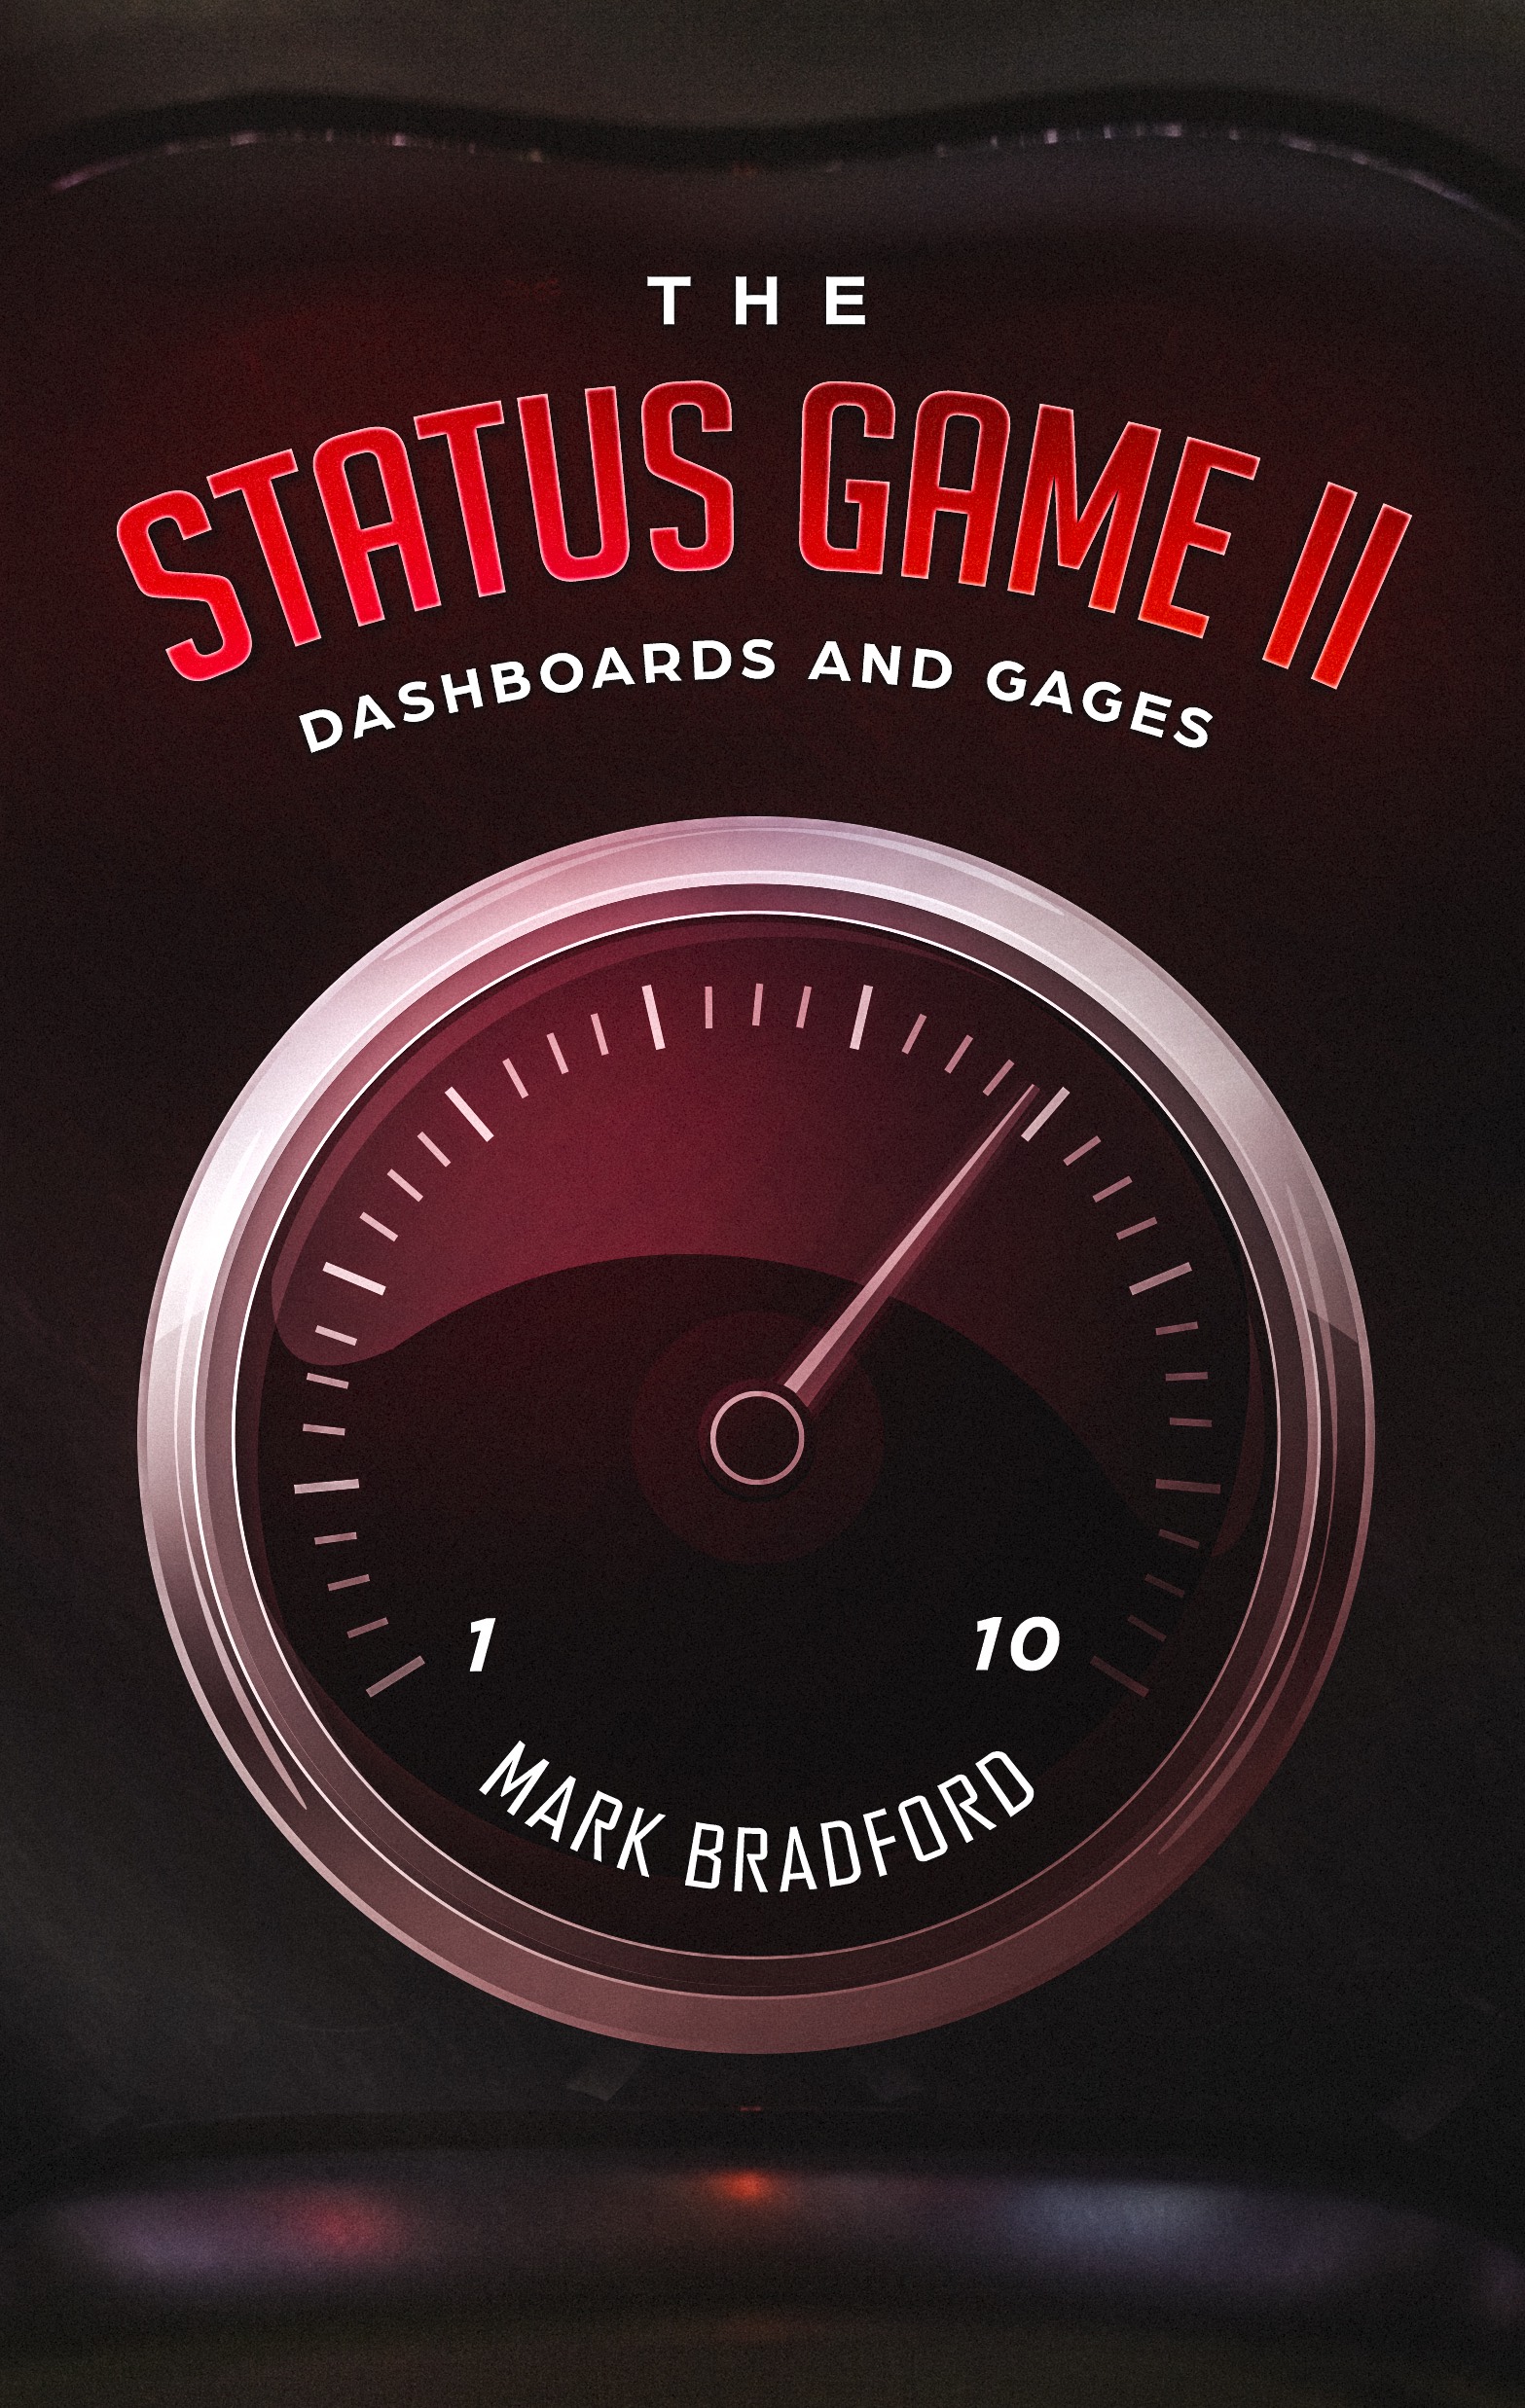 FREE: The Status Game II by Mark Bradford